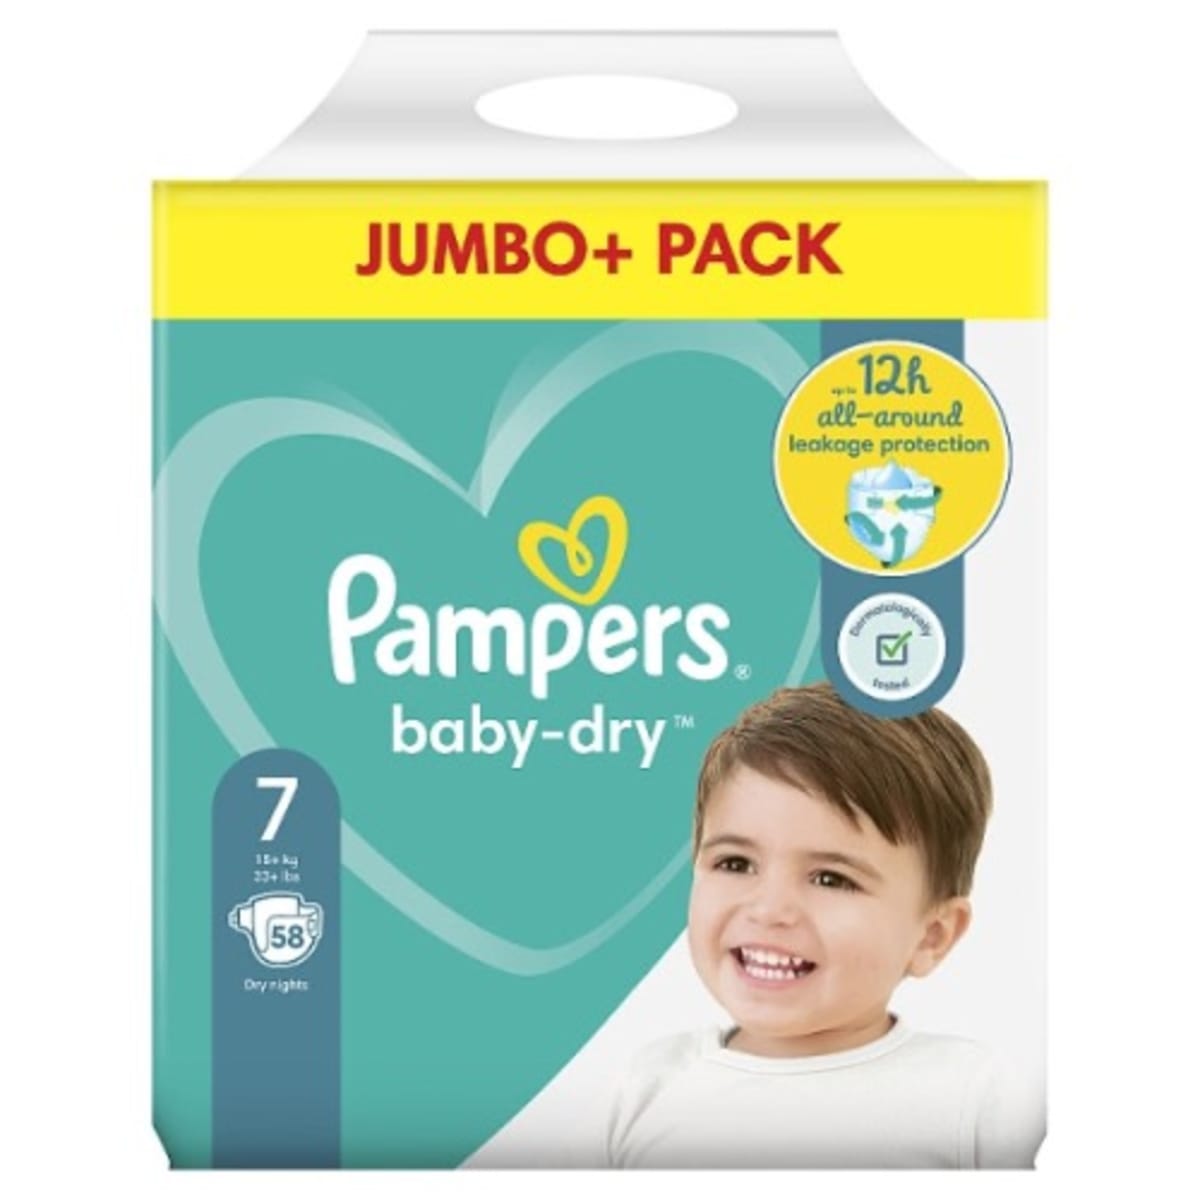 Pampers Baby Dry Nappy Pants Size 5  Jumbo Plus Pack  60pcs  Big Box  Wholesale Ghana